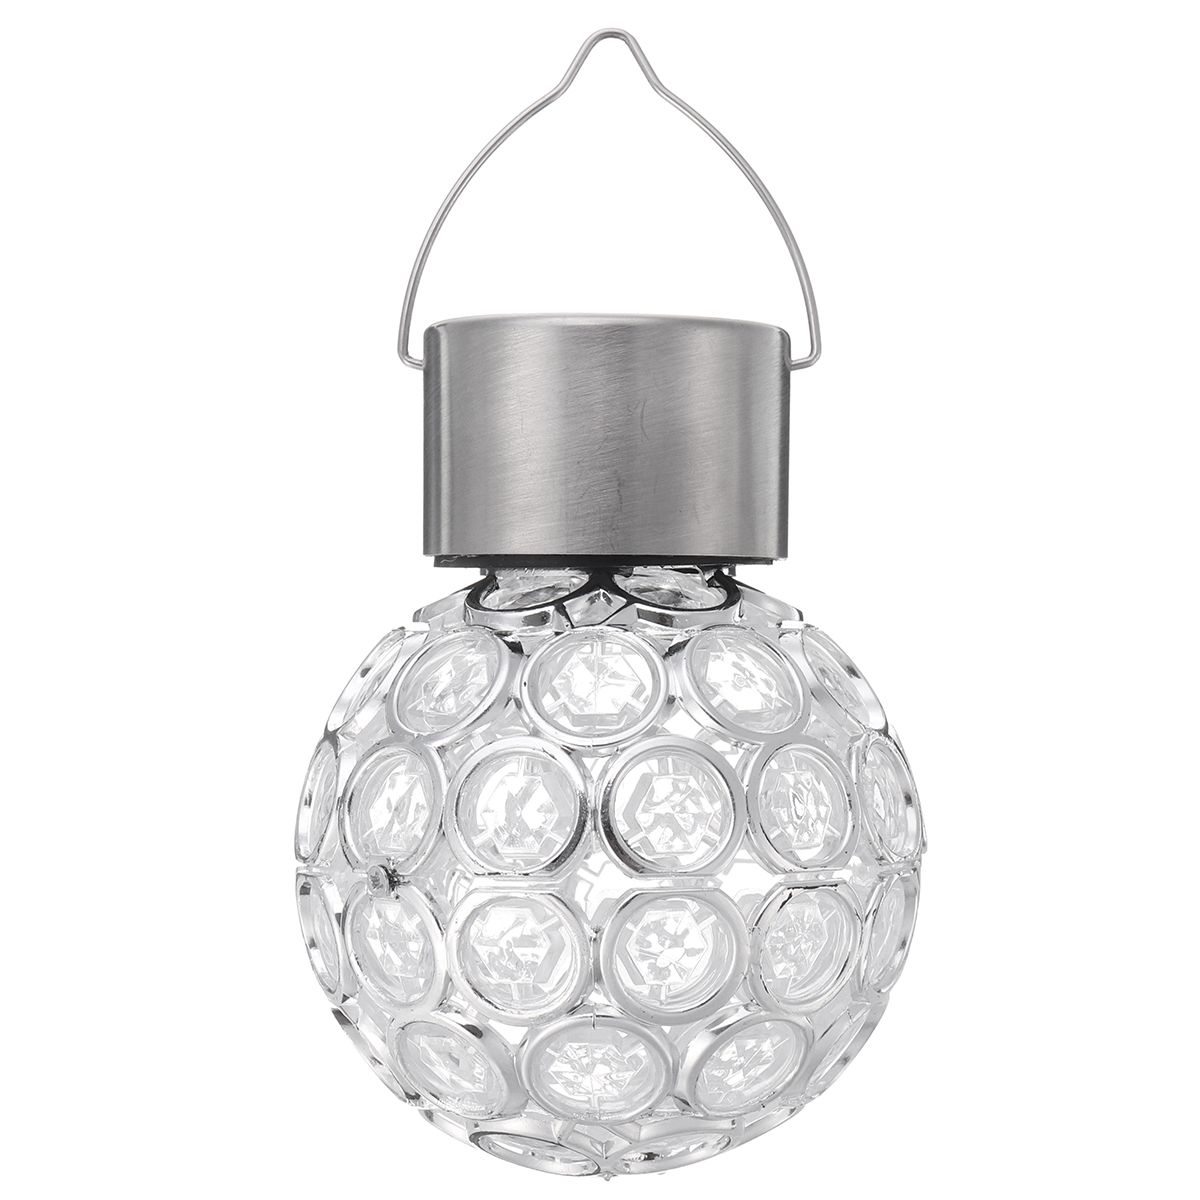 Solar-Powered-Hanging-Crystal-Ball-Night-Light-Color-Changing-Waterproof-Lamp-Garden-Lighting-Decor-1693587